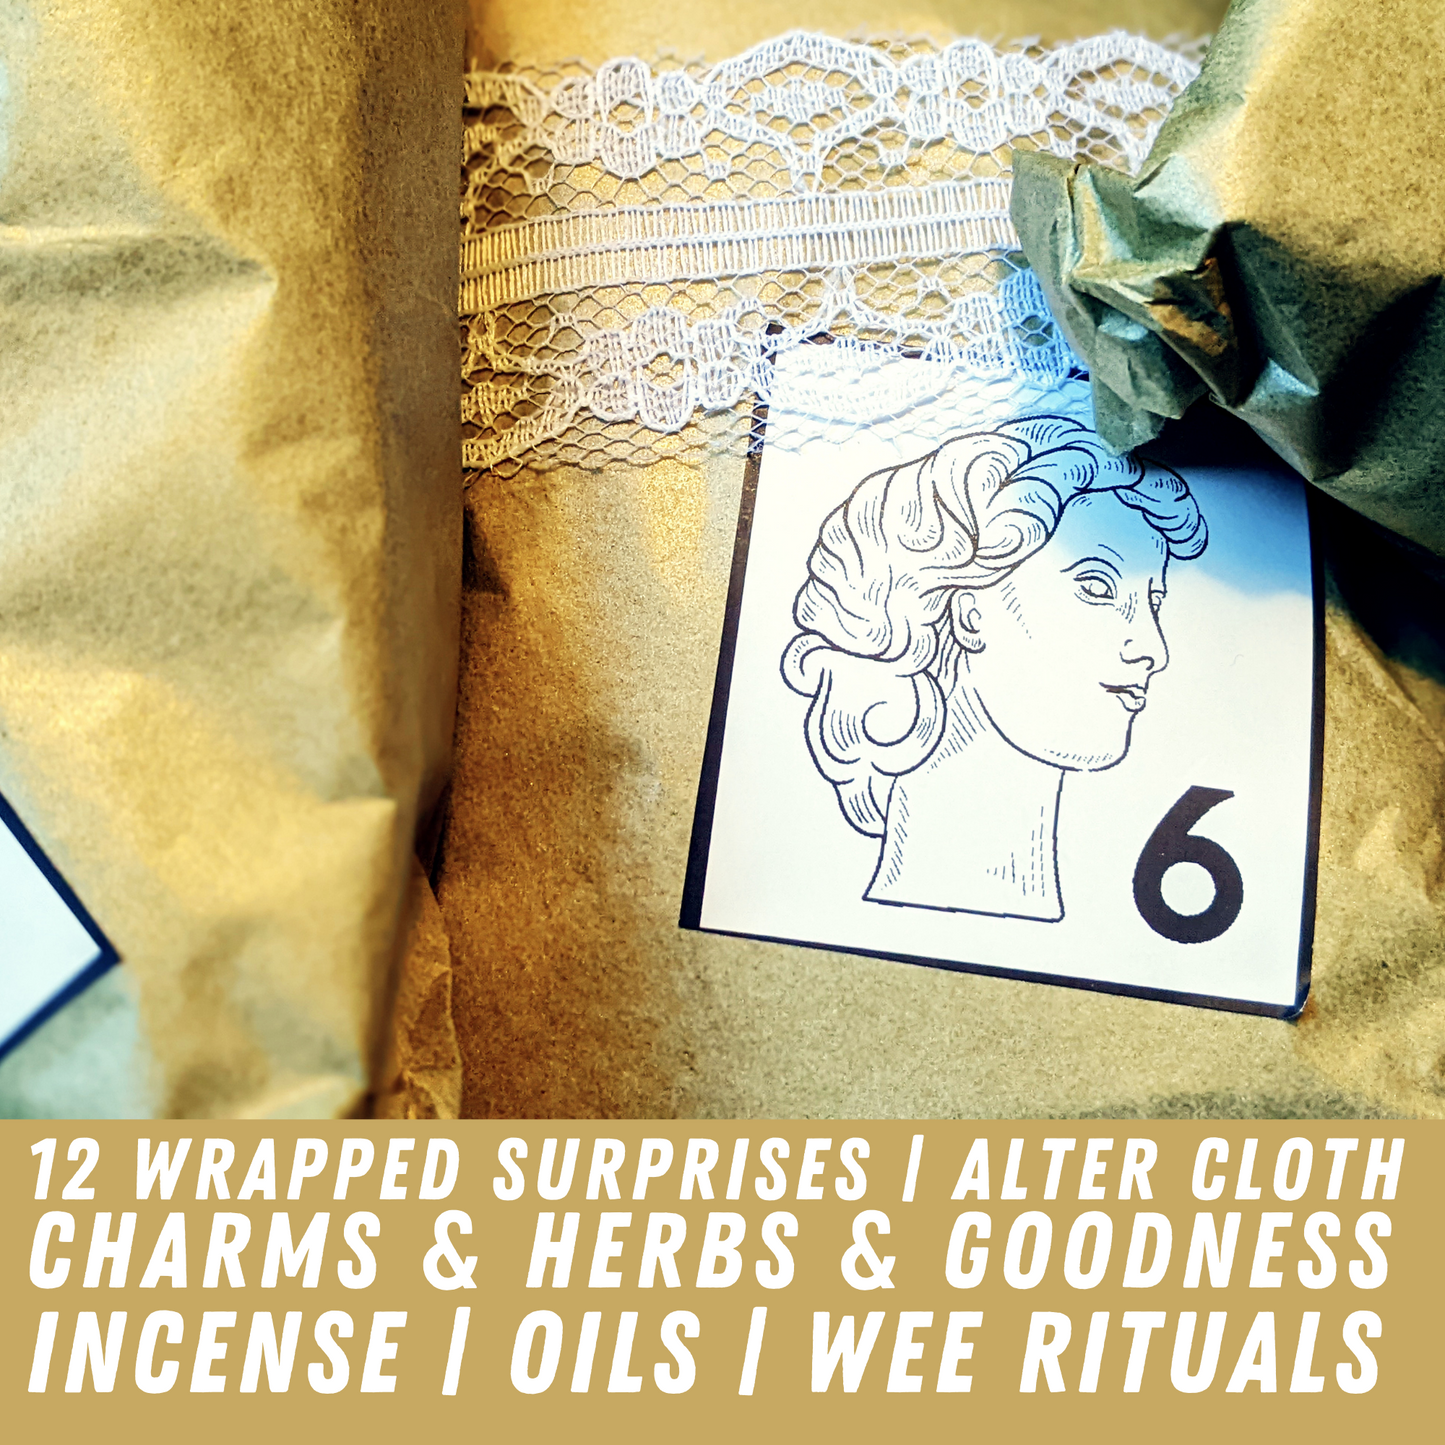 Greek Goddess Gift Kit (12 Day Countdown)